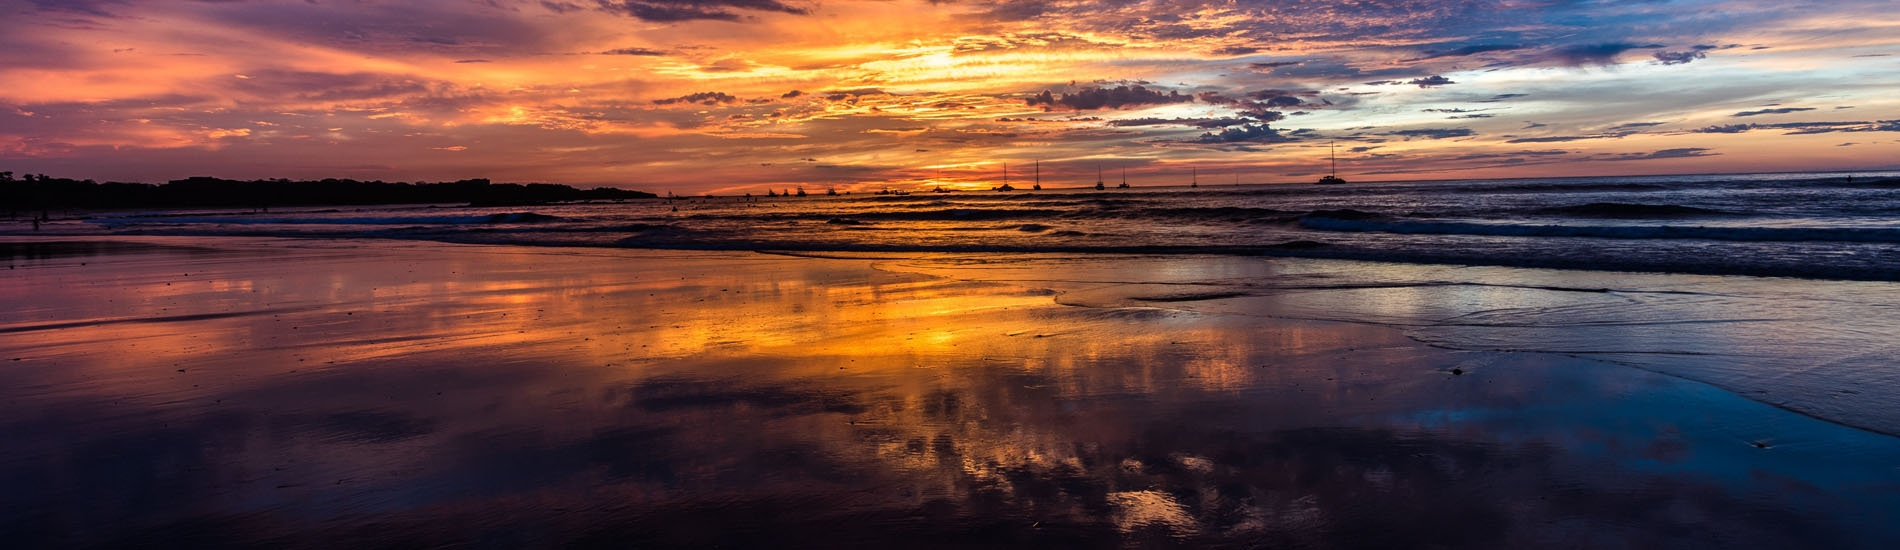 Costa Rica sunset beach